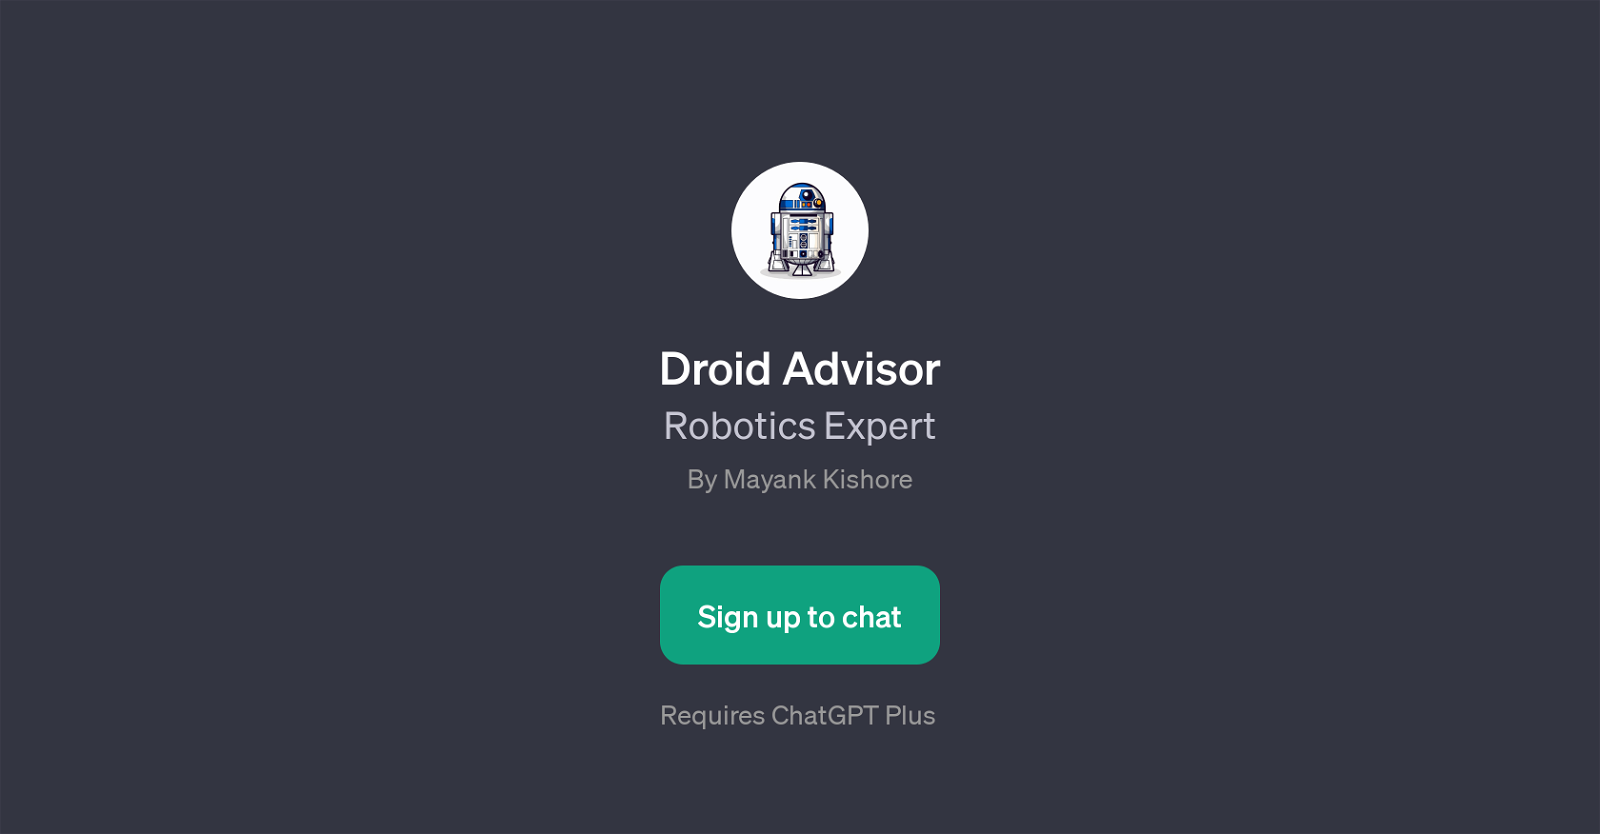 Droid Advisor website